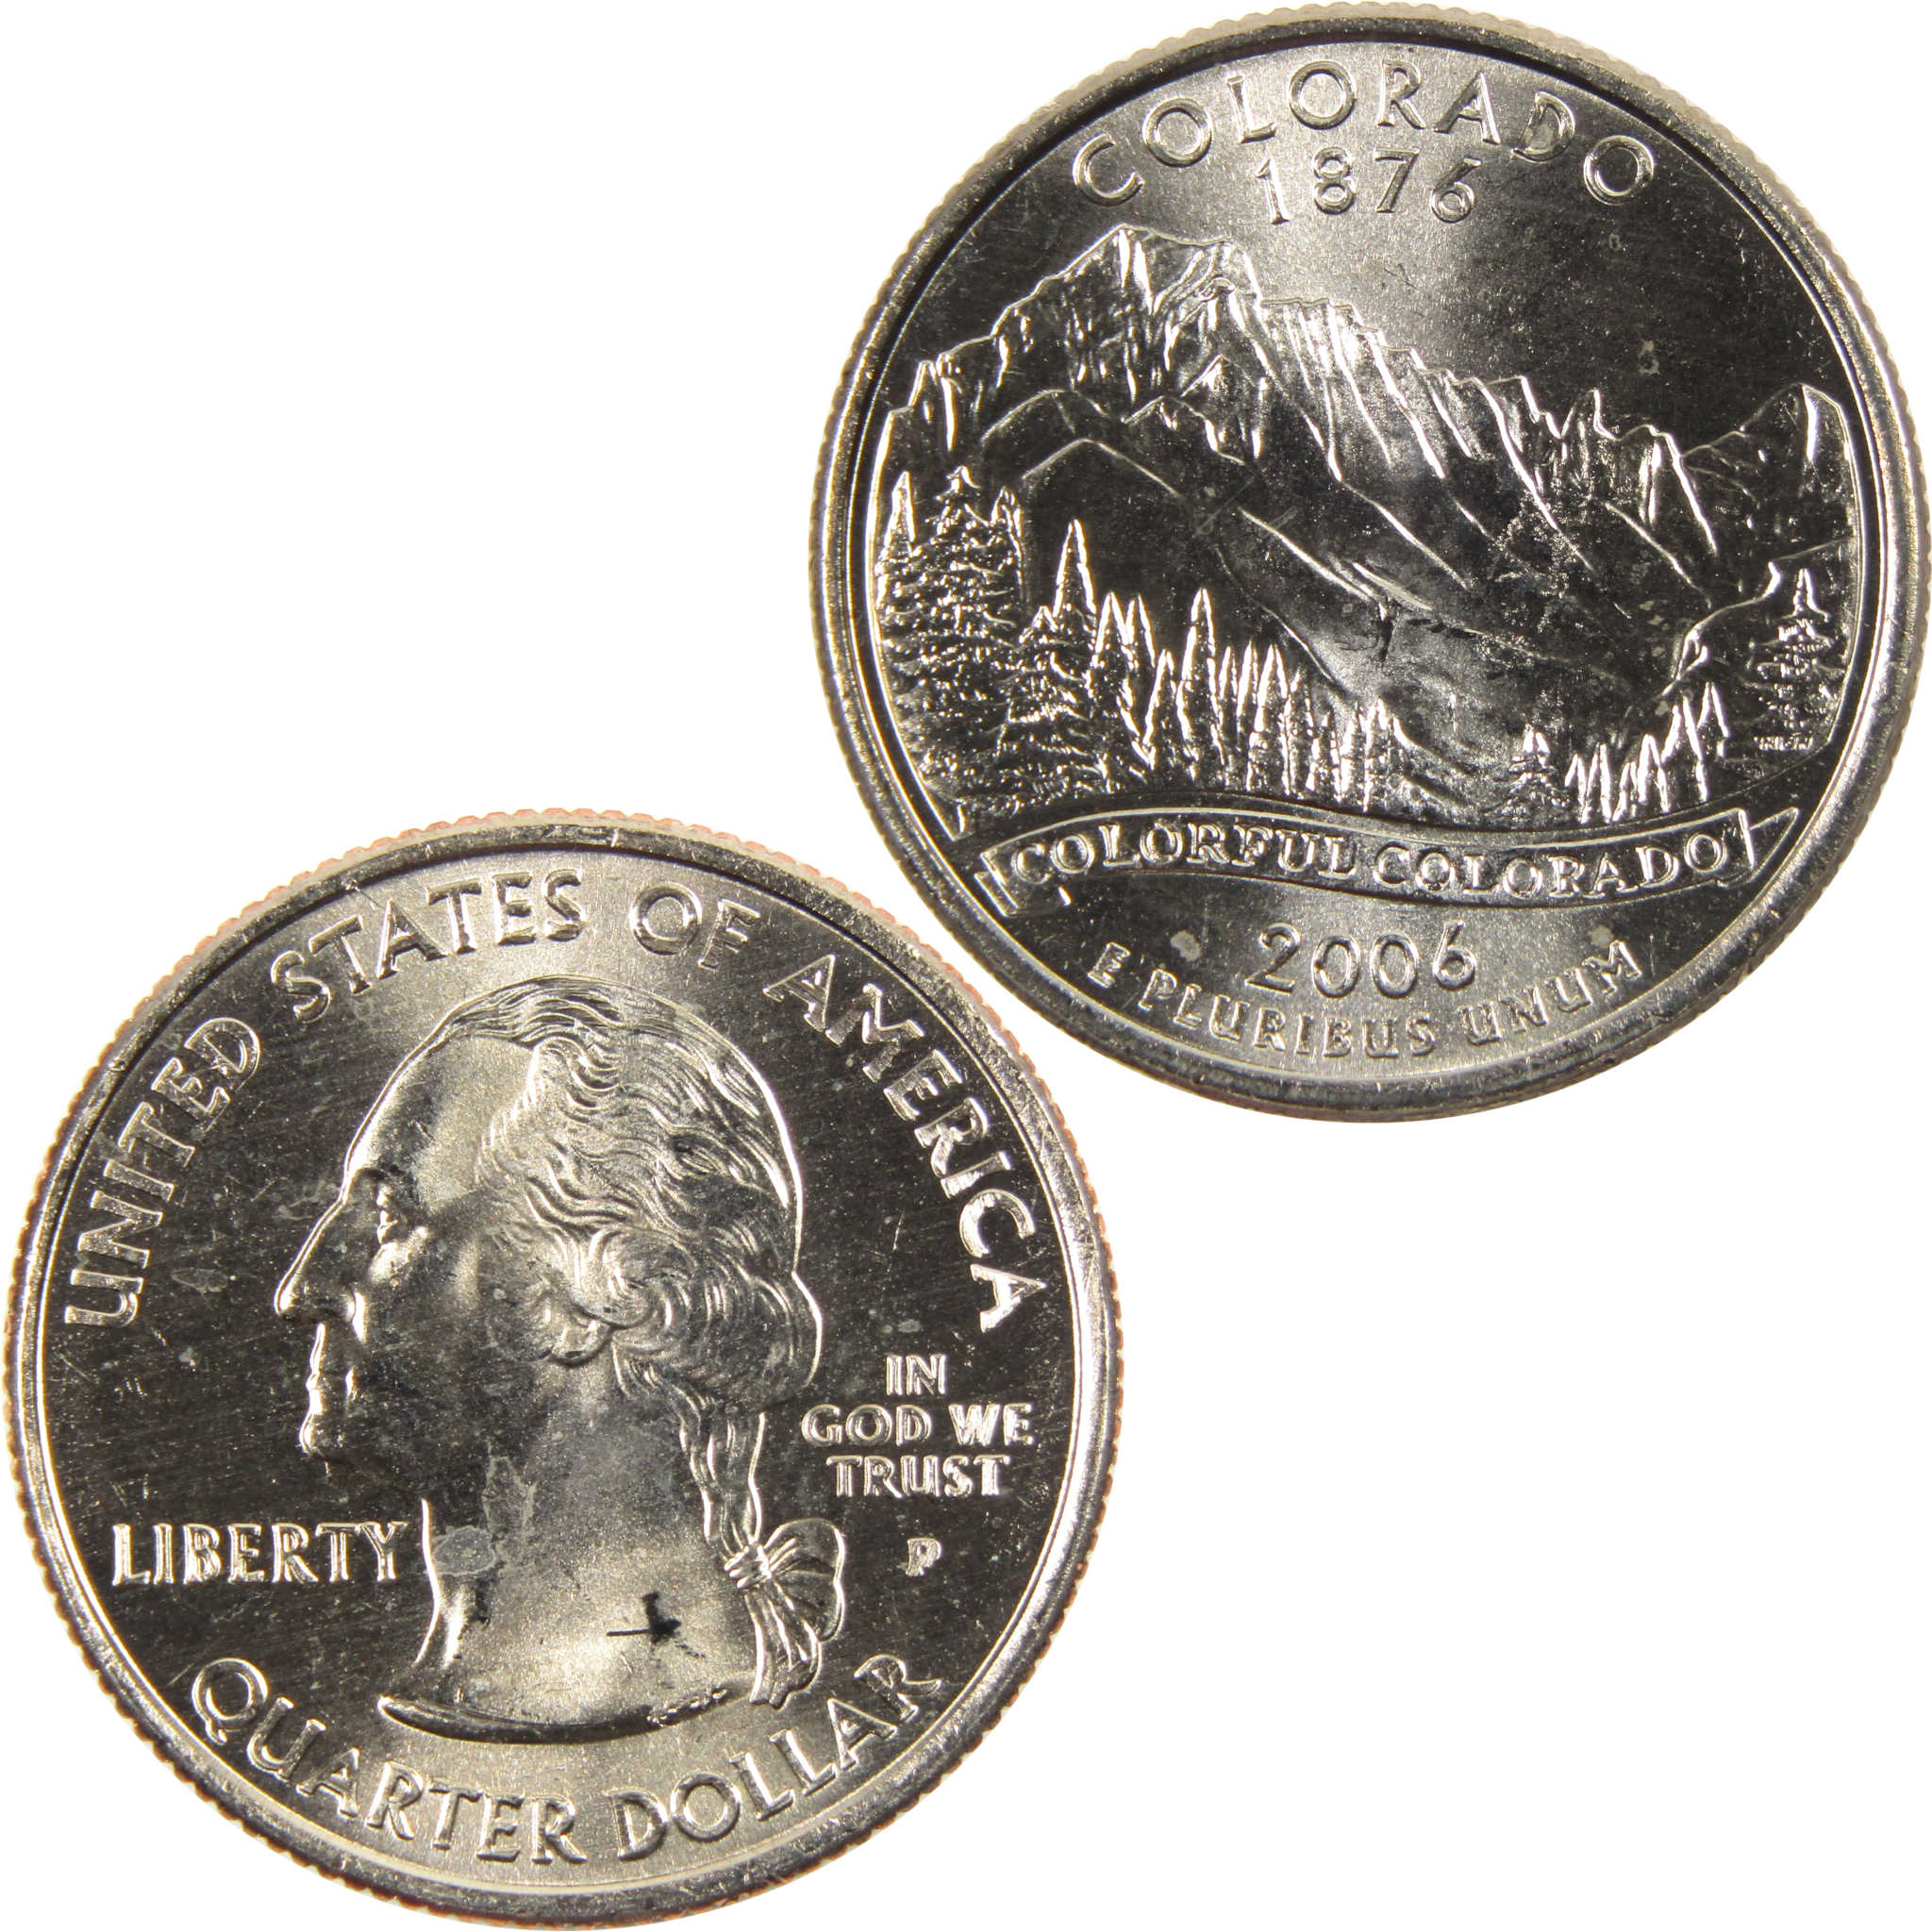 2006 P Colorado State Quarter BU Uncirculated Clad 25c Coin